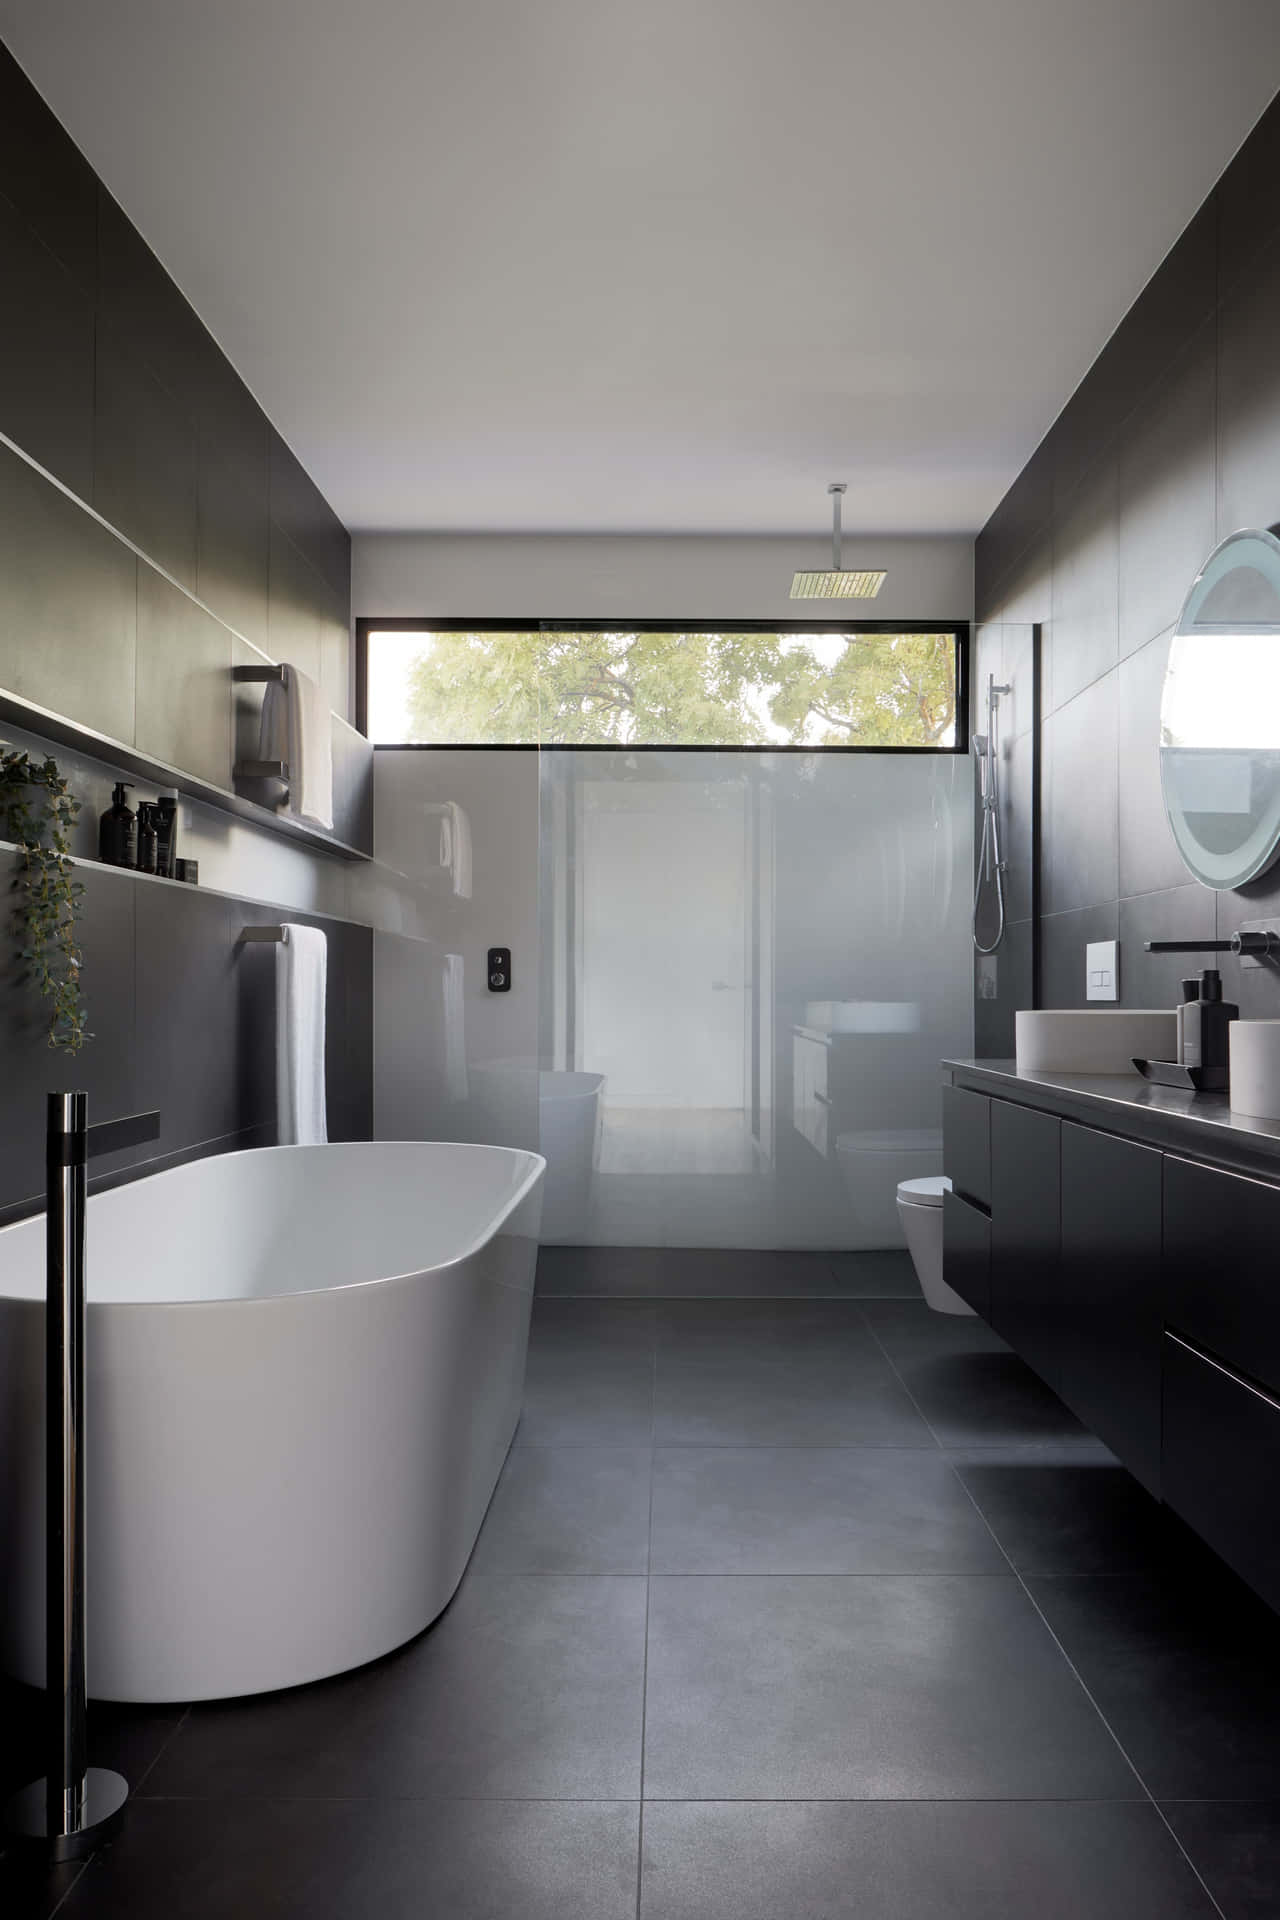 Create a personal oasis with a lavish bathroom